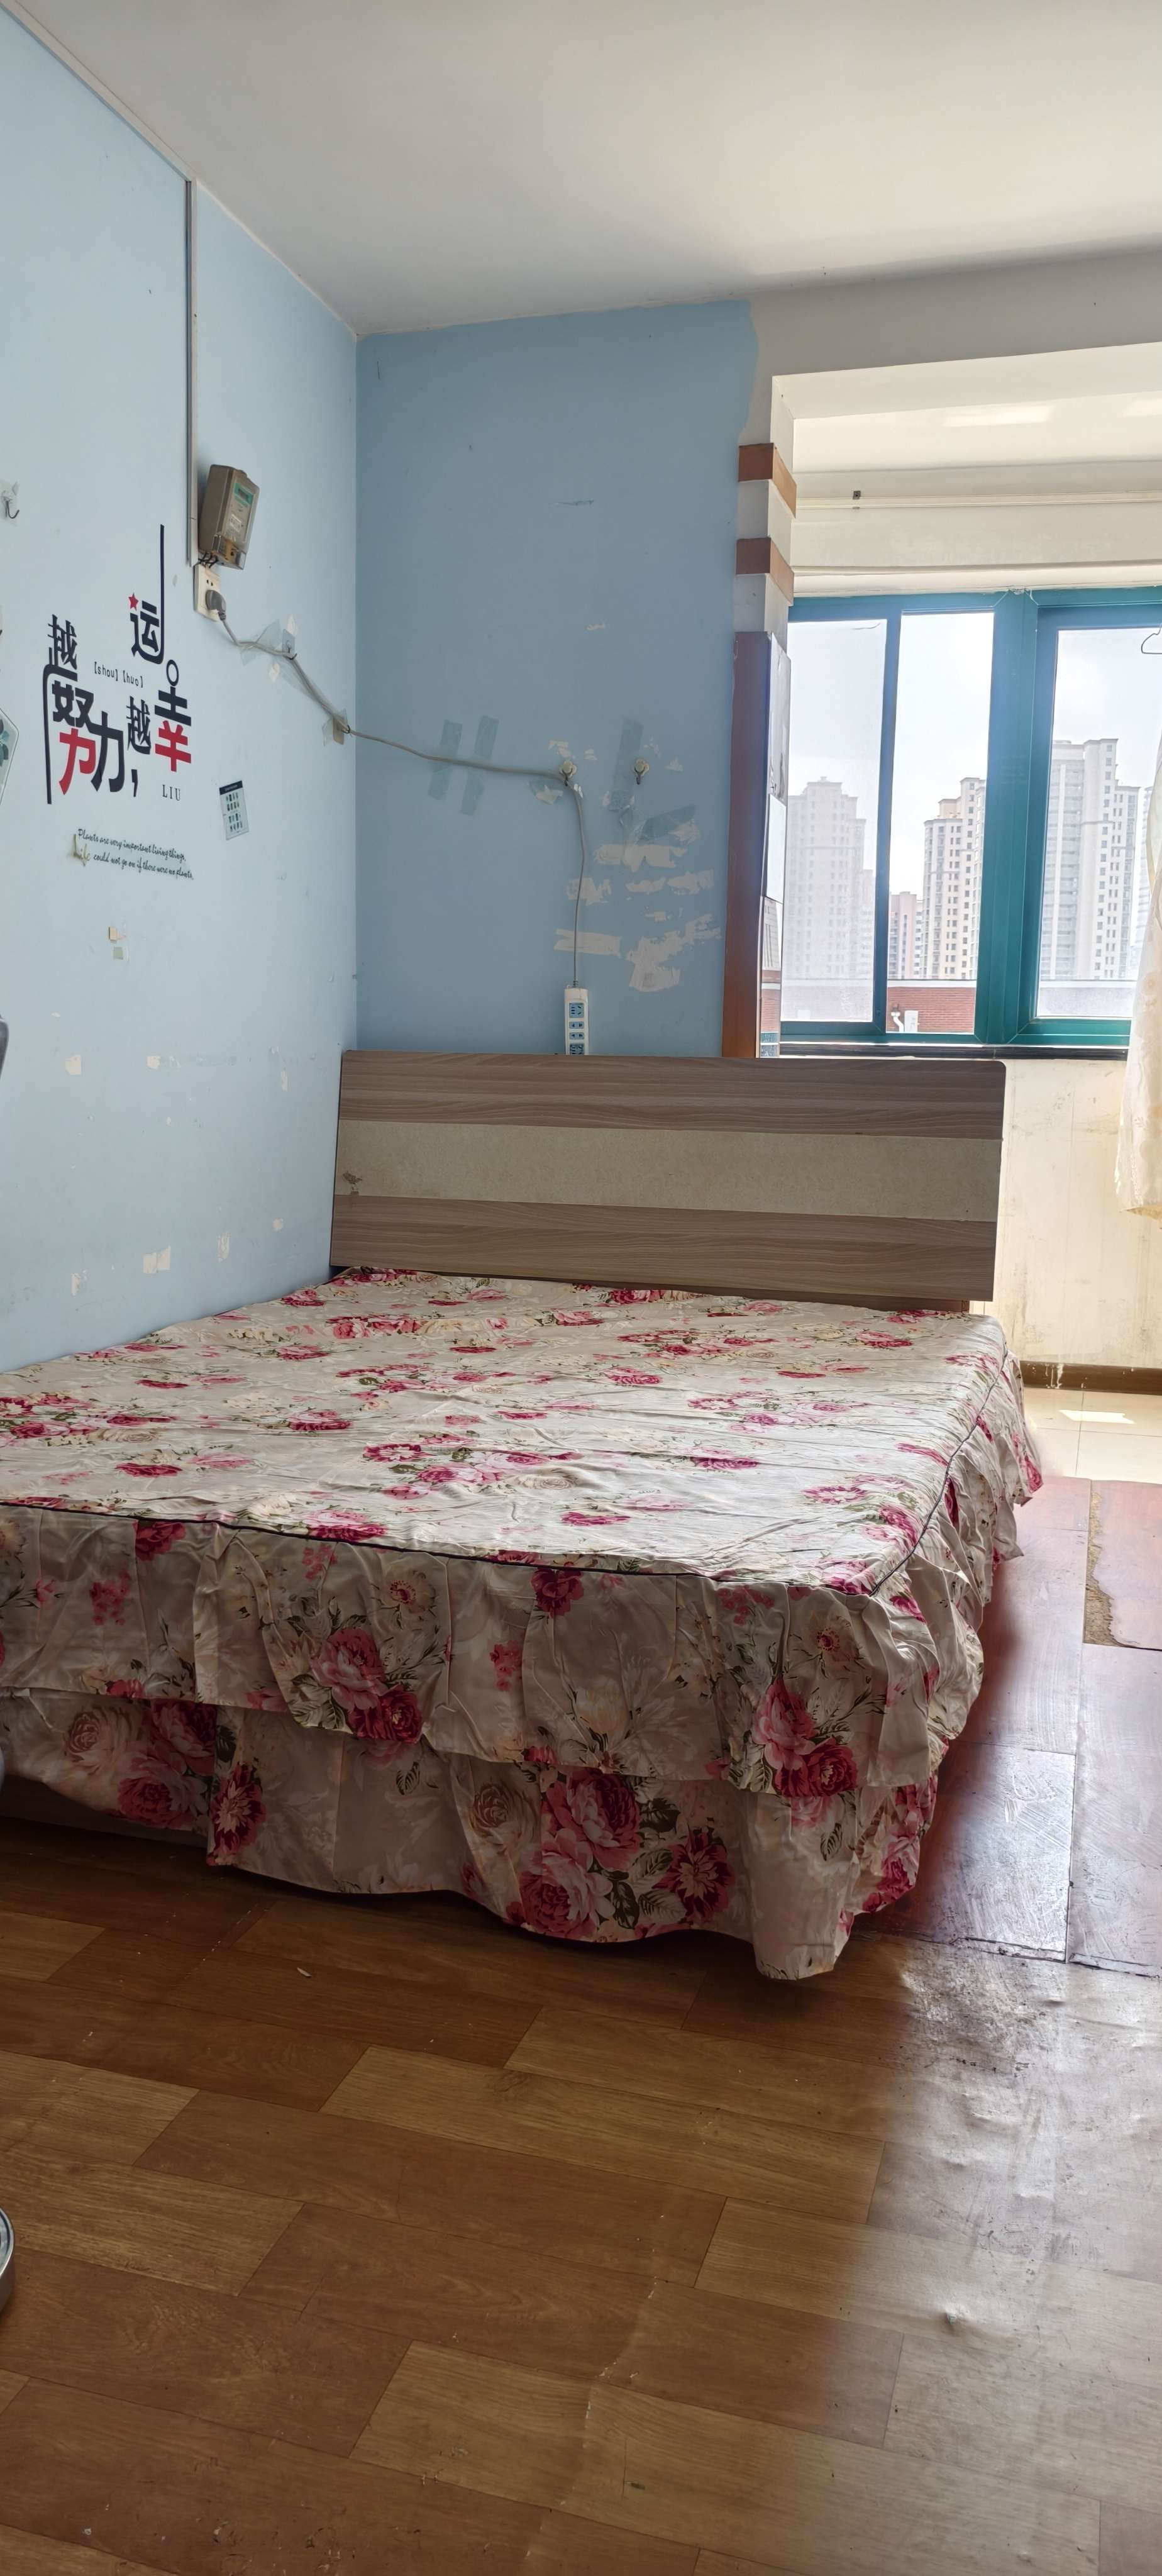 Qingdao-Licang-Cozy Home,No Gender Limit,Hustle & Bustle,“Friends”,Chilled